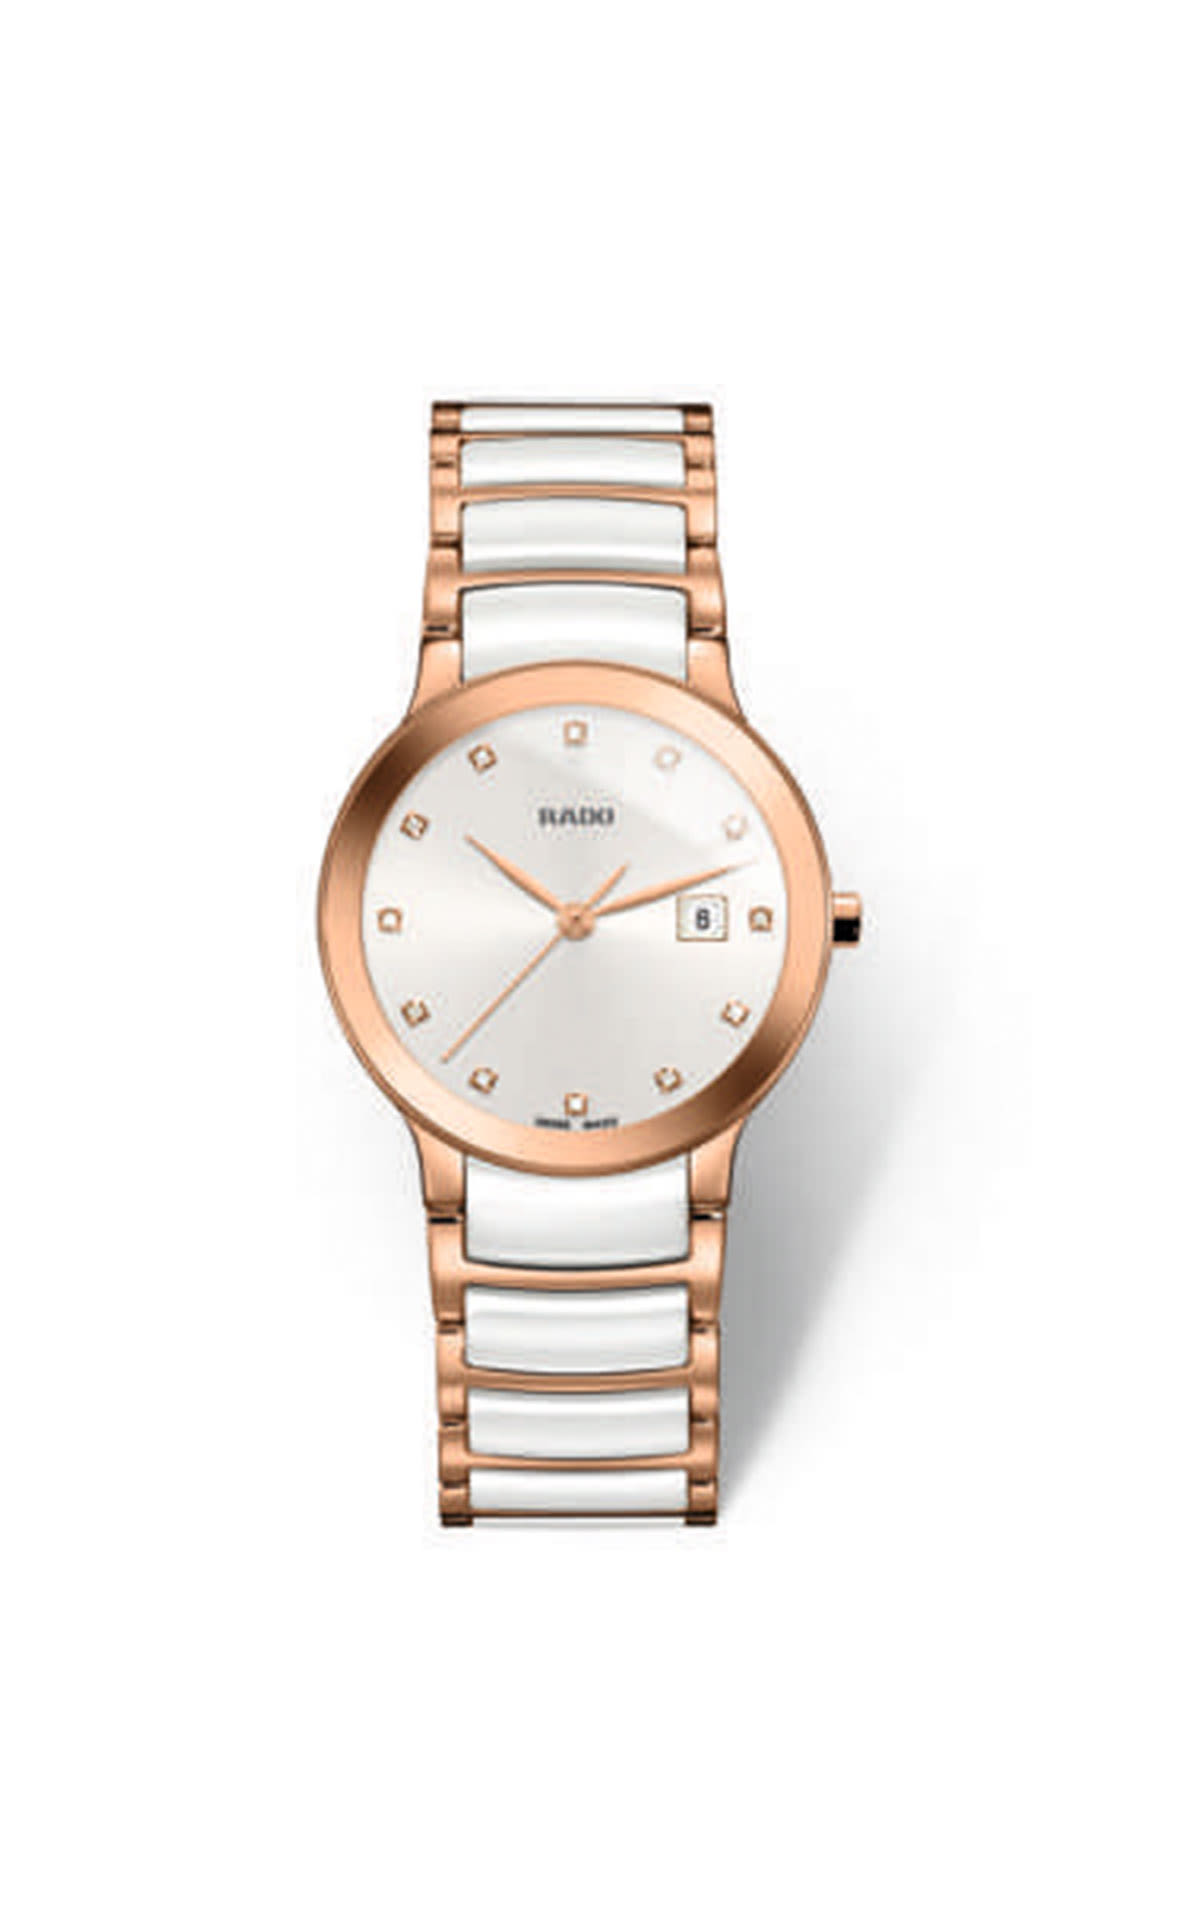 White Rado watch with rose gold details